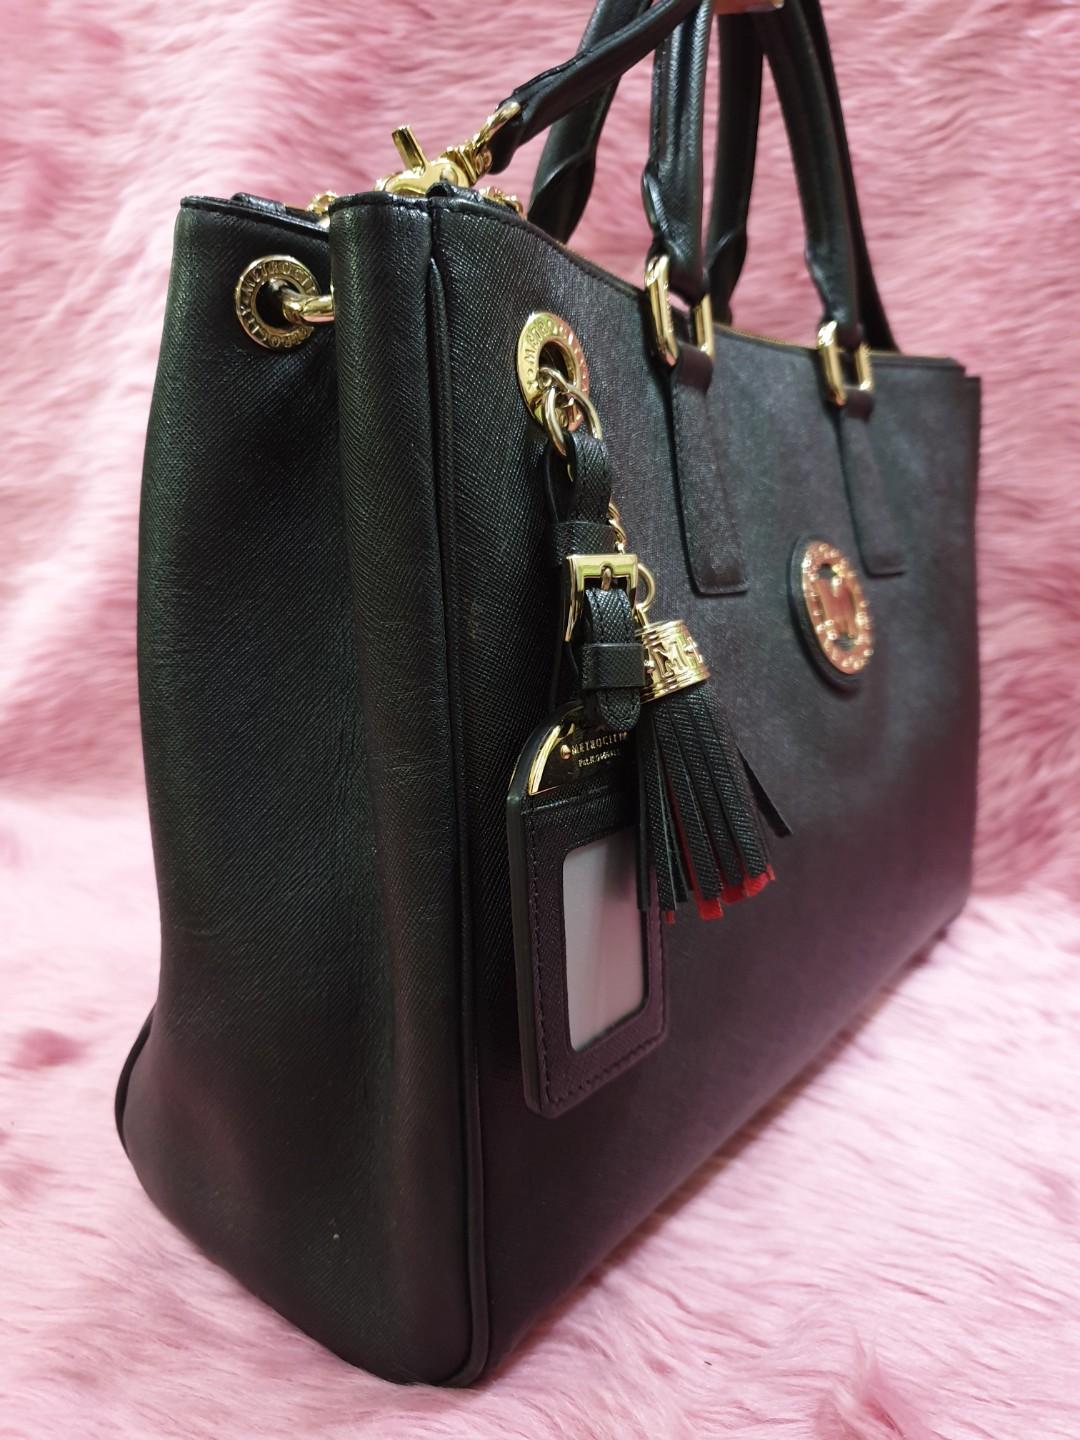 Metrocity Saffiano Black Leather Shoulder Handbag Large Deadstock Retail  $685